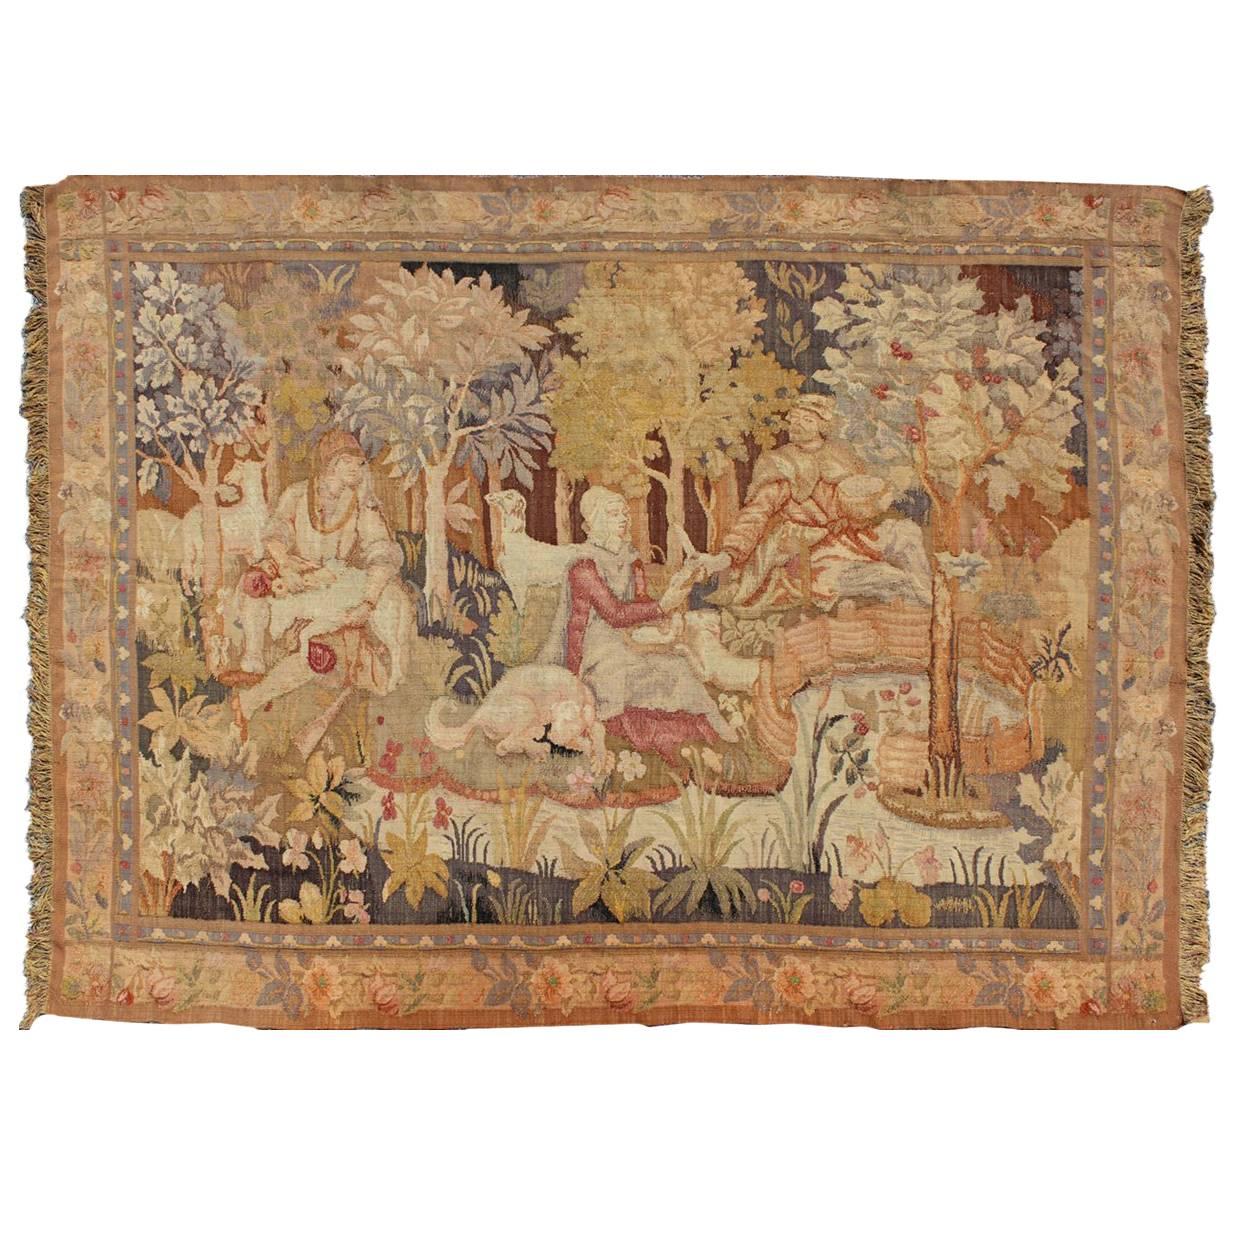 European Tapestry from 19th Century, France Depicting Abundant Woodland Scene